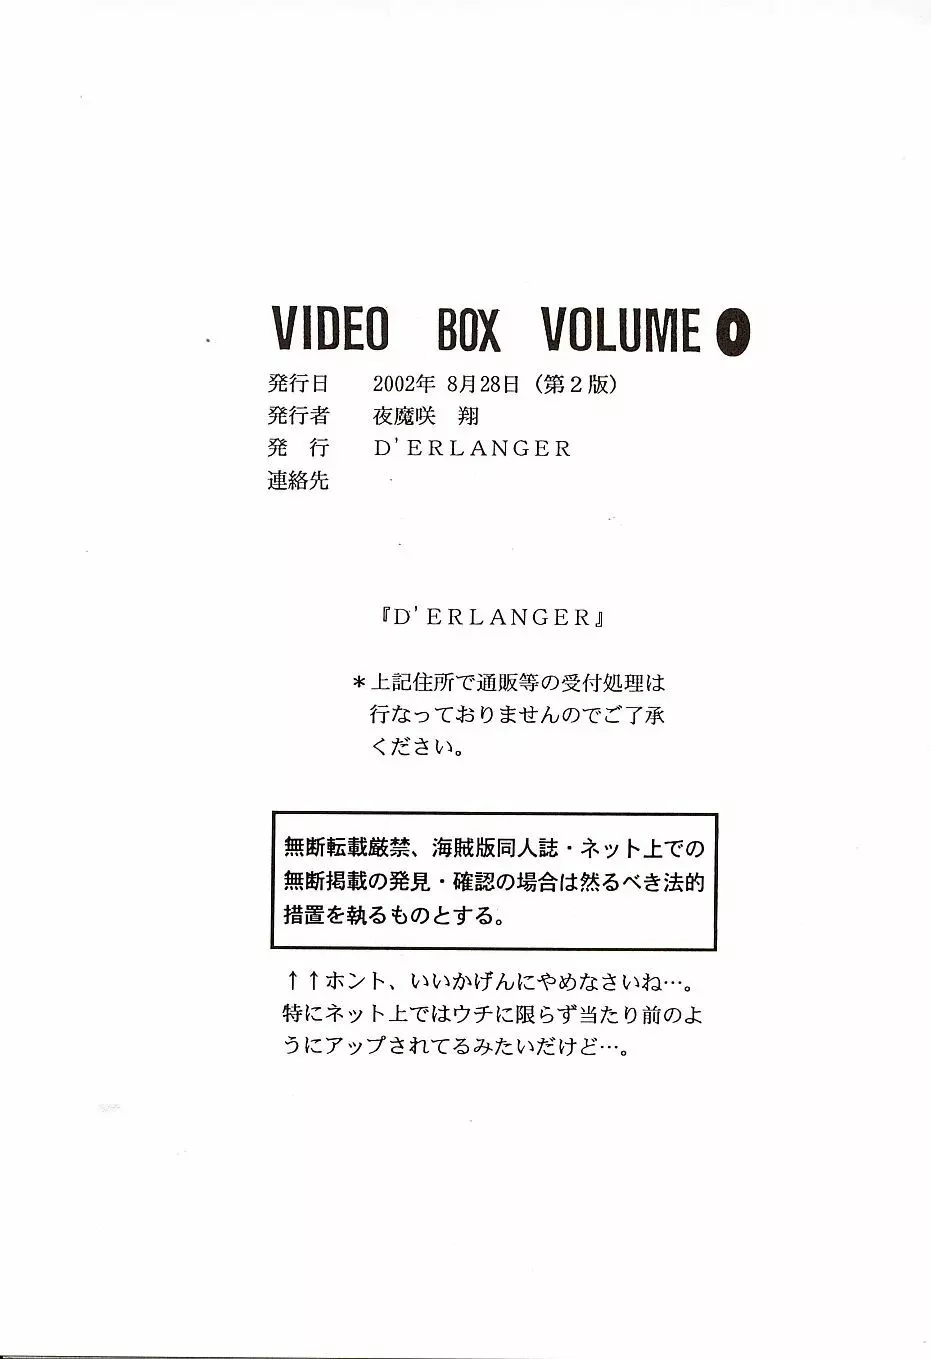 電影匣 VIDEO BOX VOLUME 0 21ページ